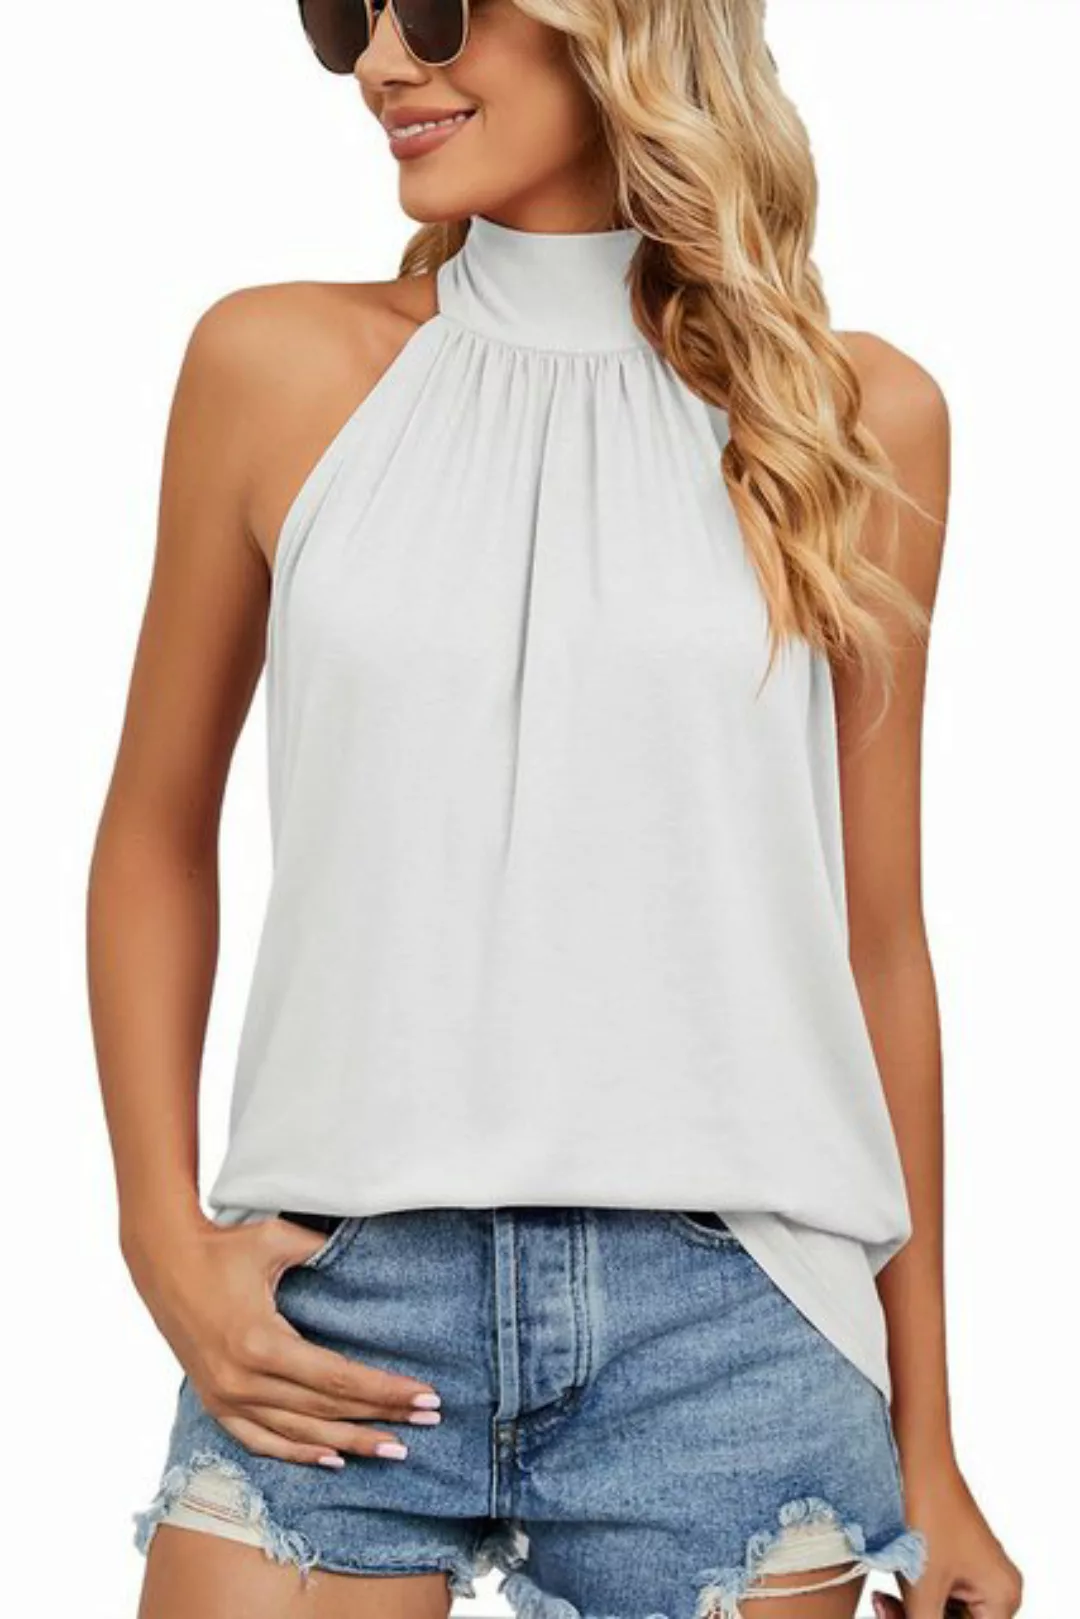 B.X Blusentop Damen ärmellos Sommerhemd Mode Neckholder-Shirt Pull-on-Shirt günstig online kaufen